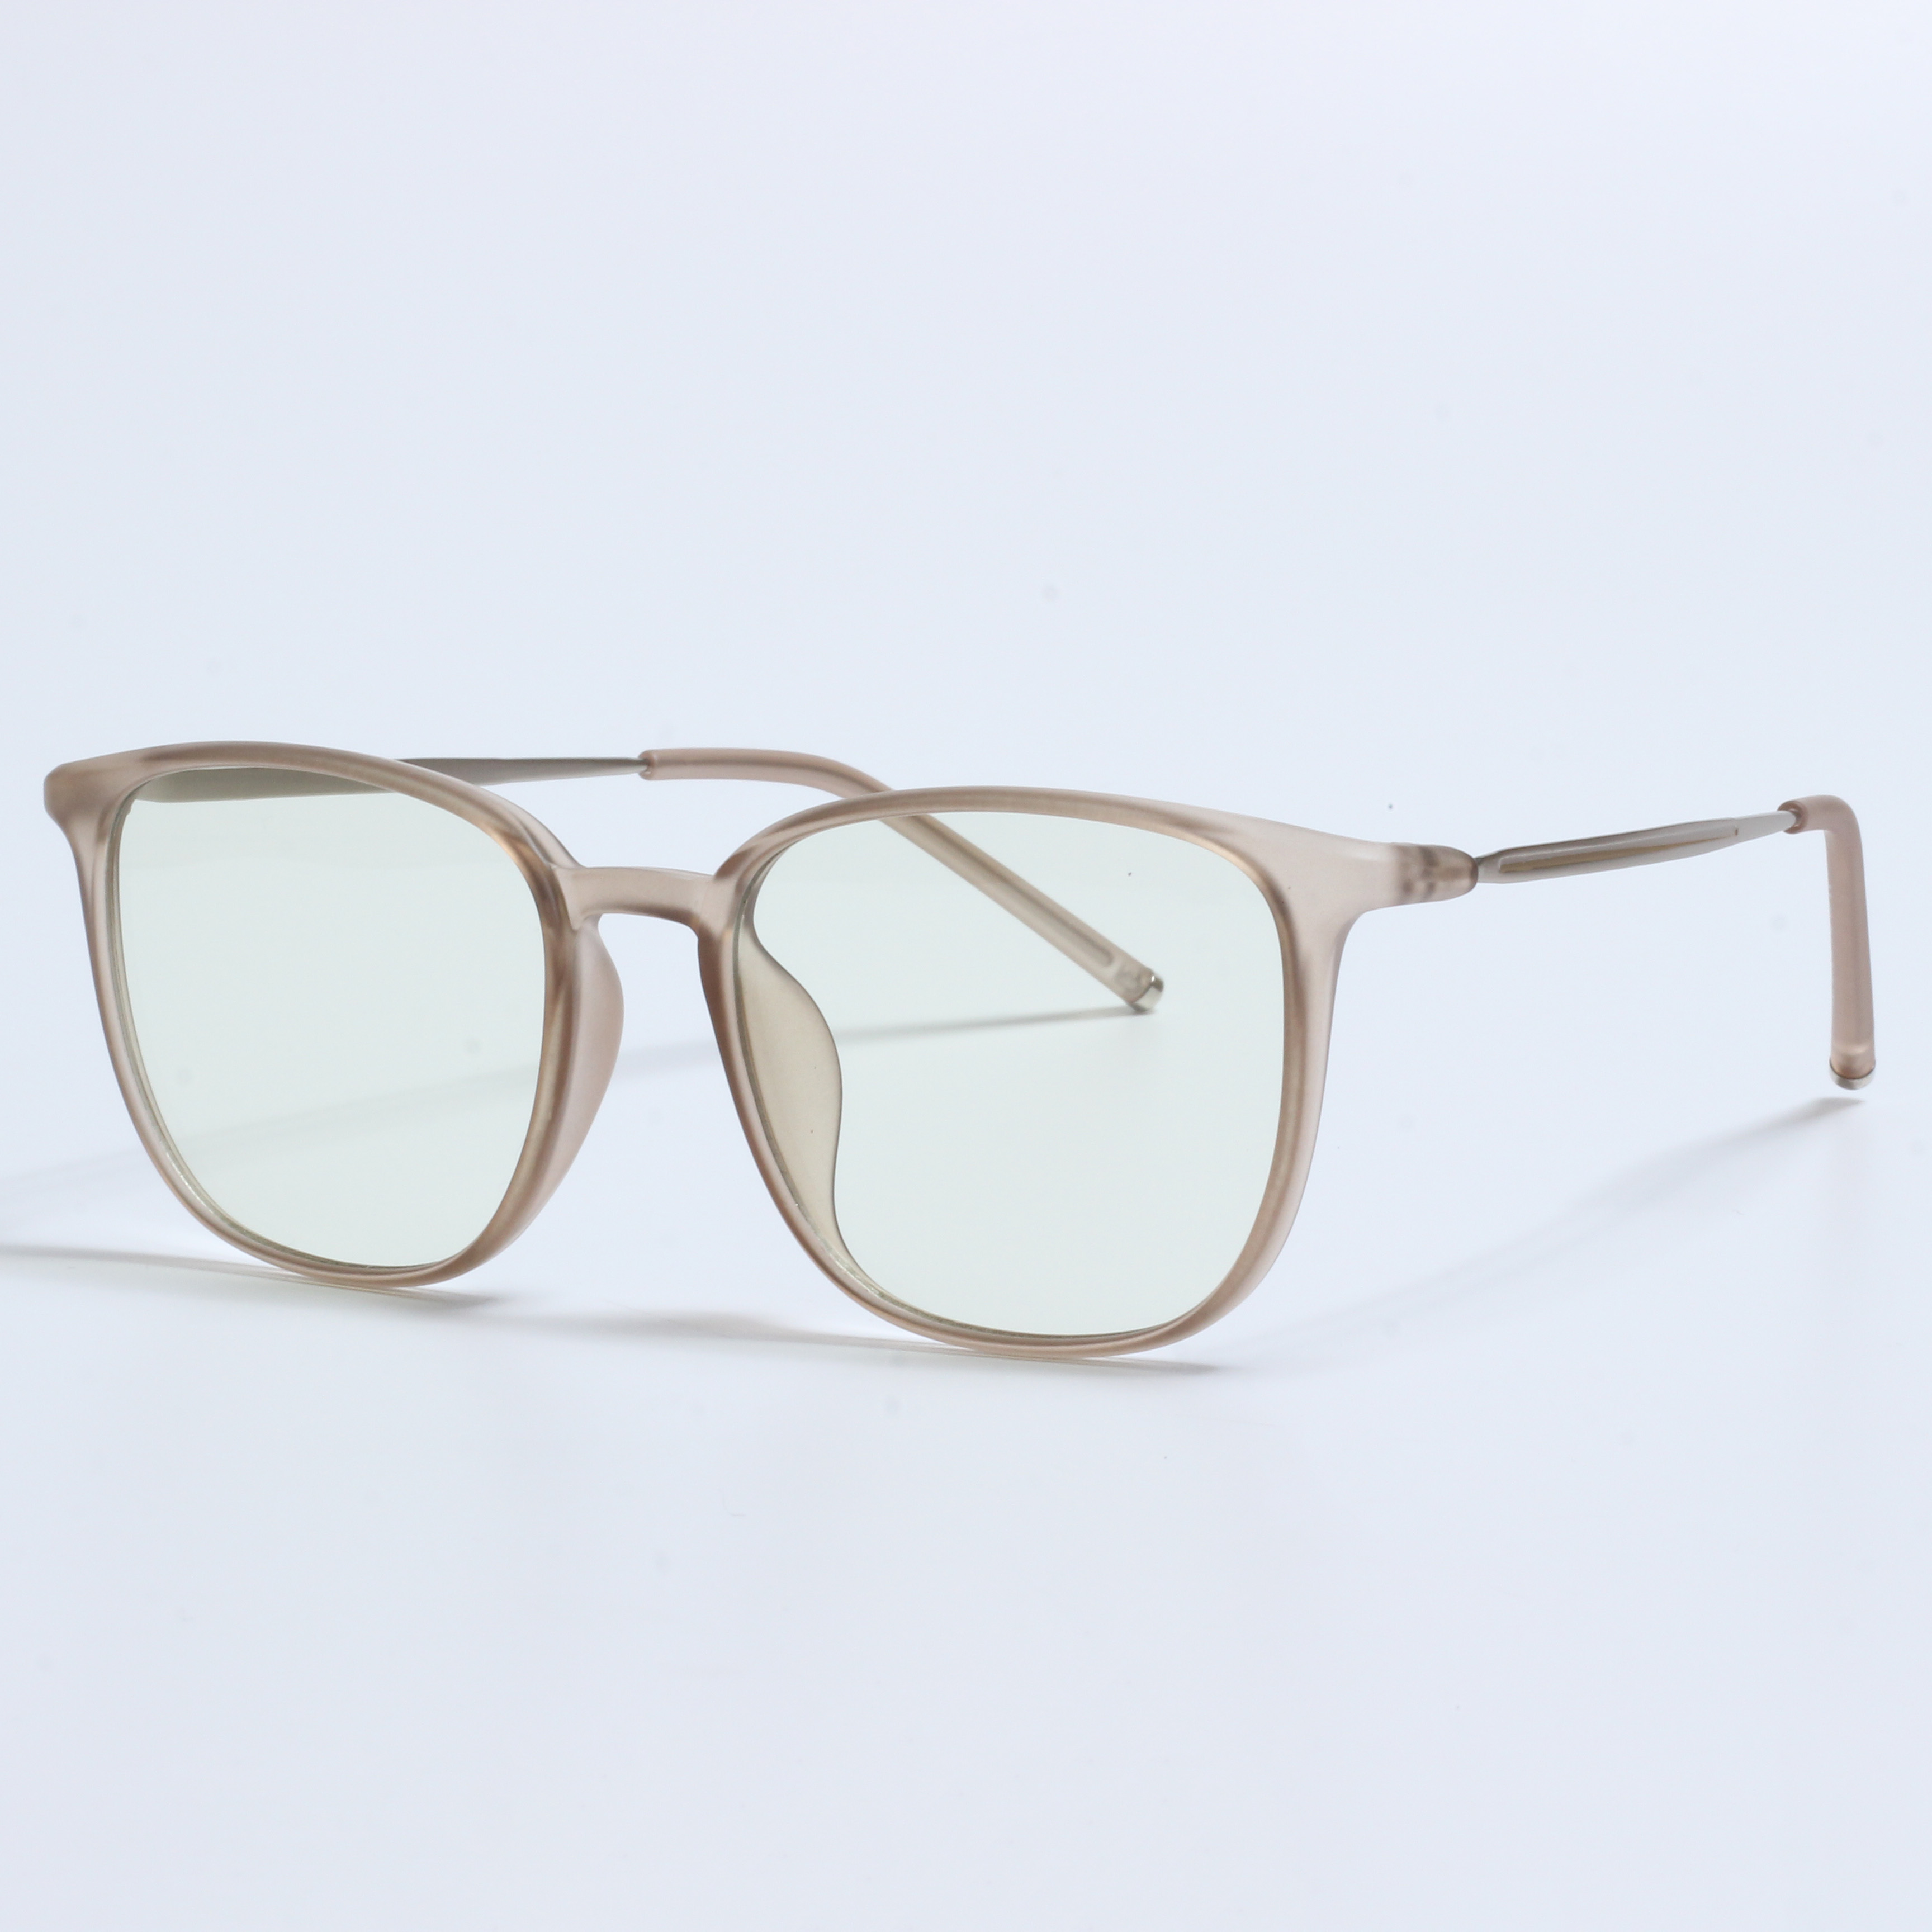 Új retro lunette anti lumiere dioptriás szemüveg (6)